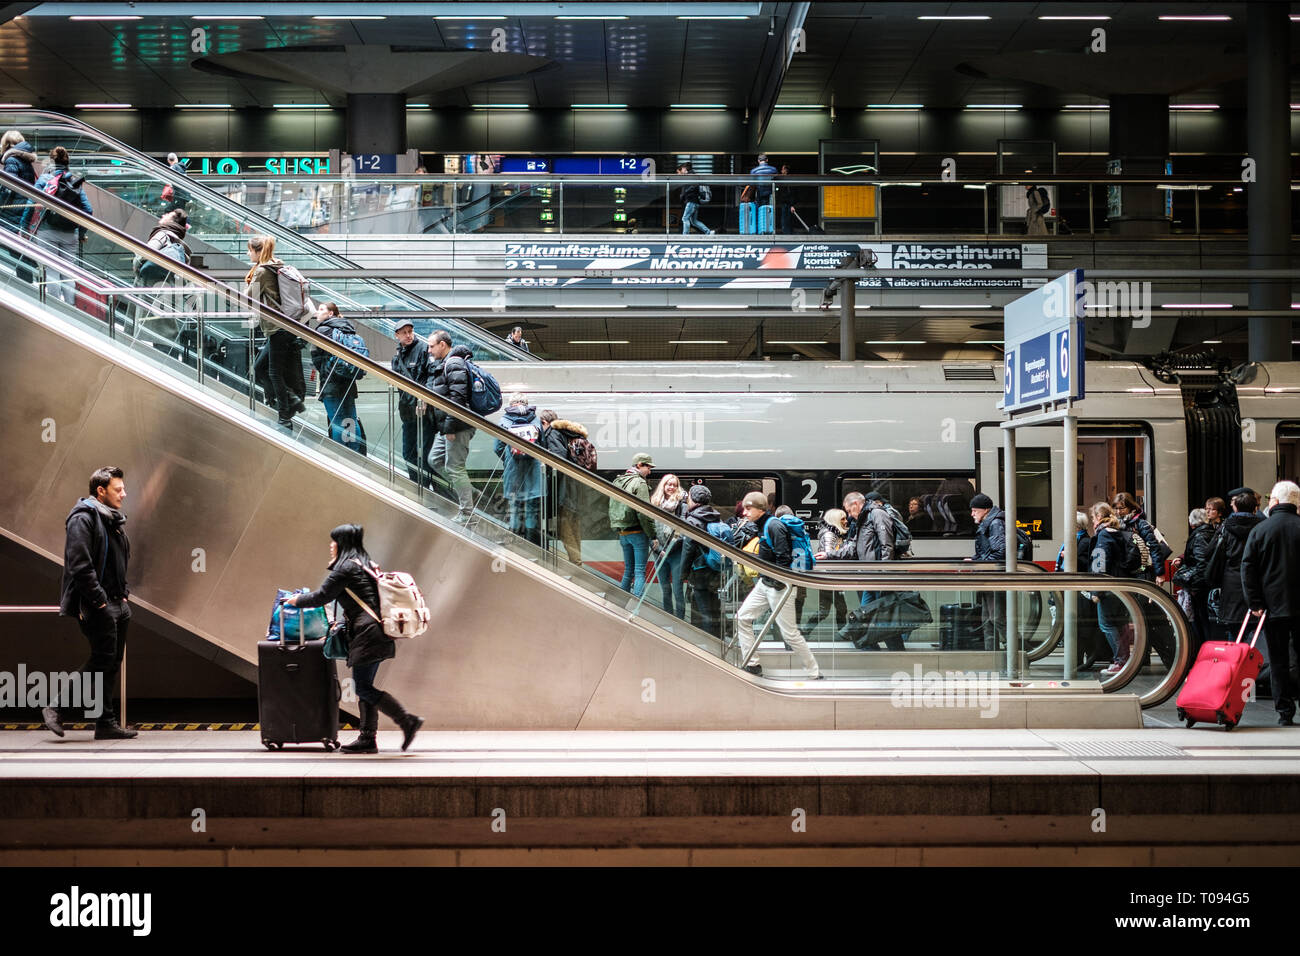 Berlin, Germany - march 2019: People with luggage on escalator inside main train station (Hauptbahnhof) in Berlin, Germany Stock Photo